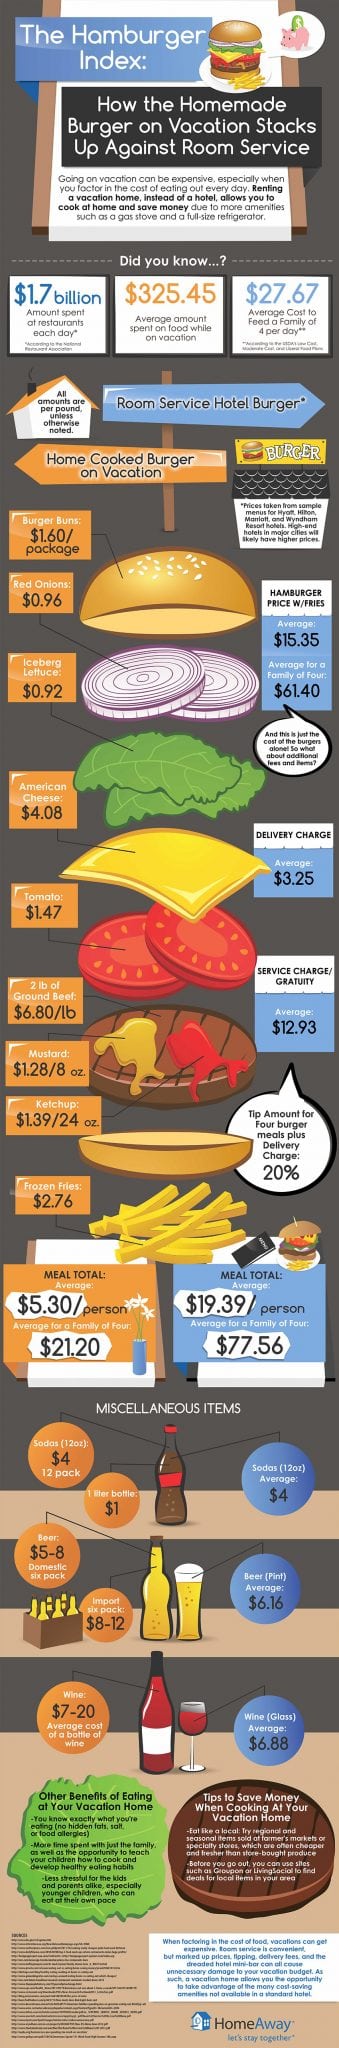 The Hamburger Index - Infographic.jpg